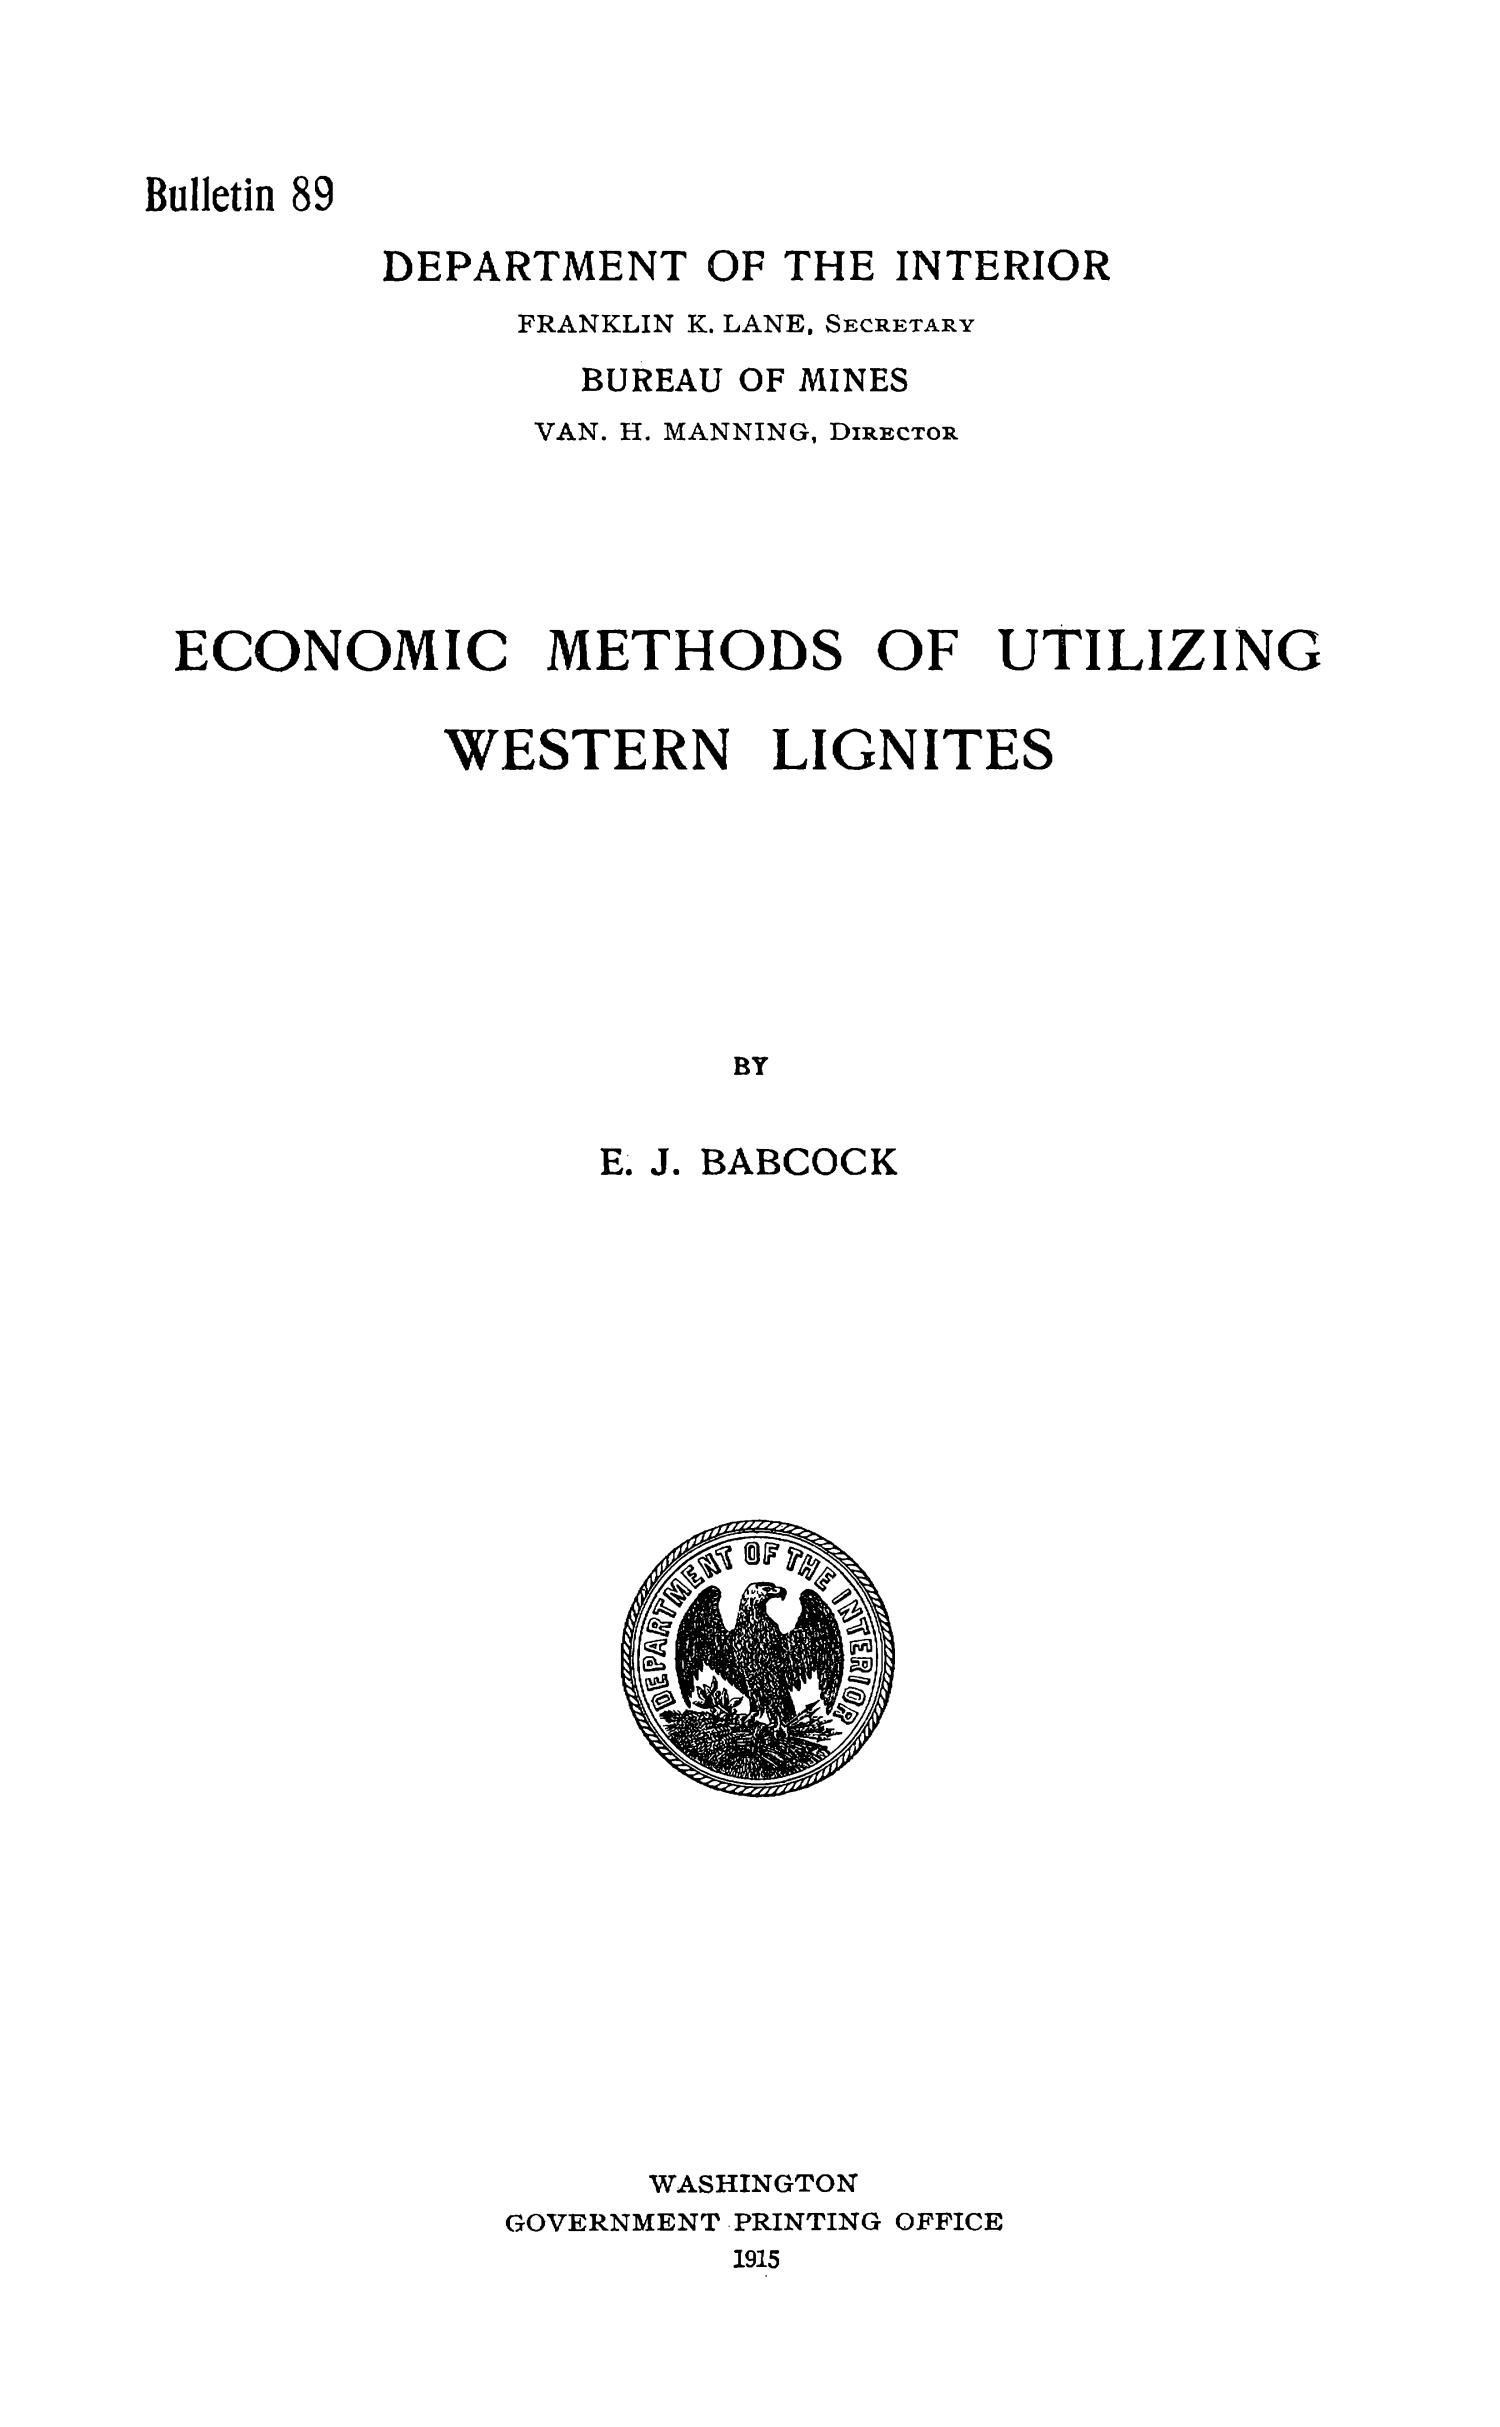 Economic Methods of Utilizing Western Lignites
                                                
                                                    Title Page
                                                